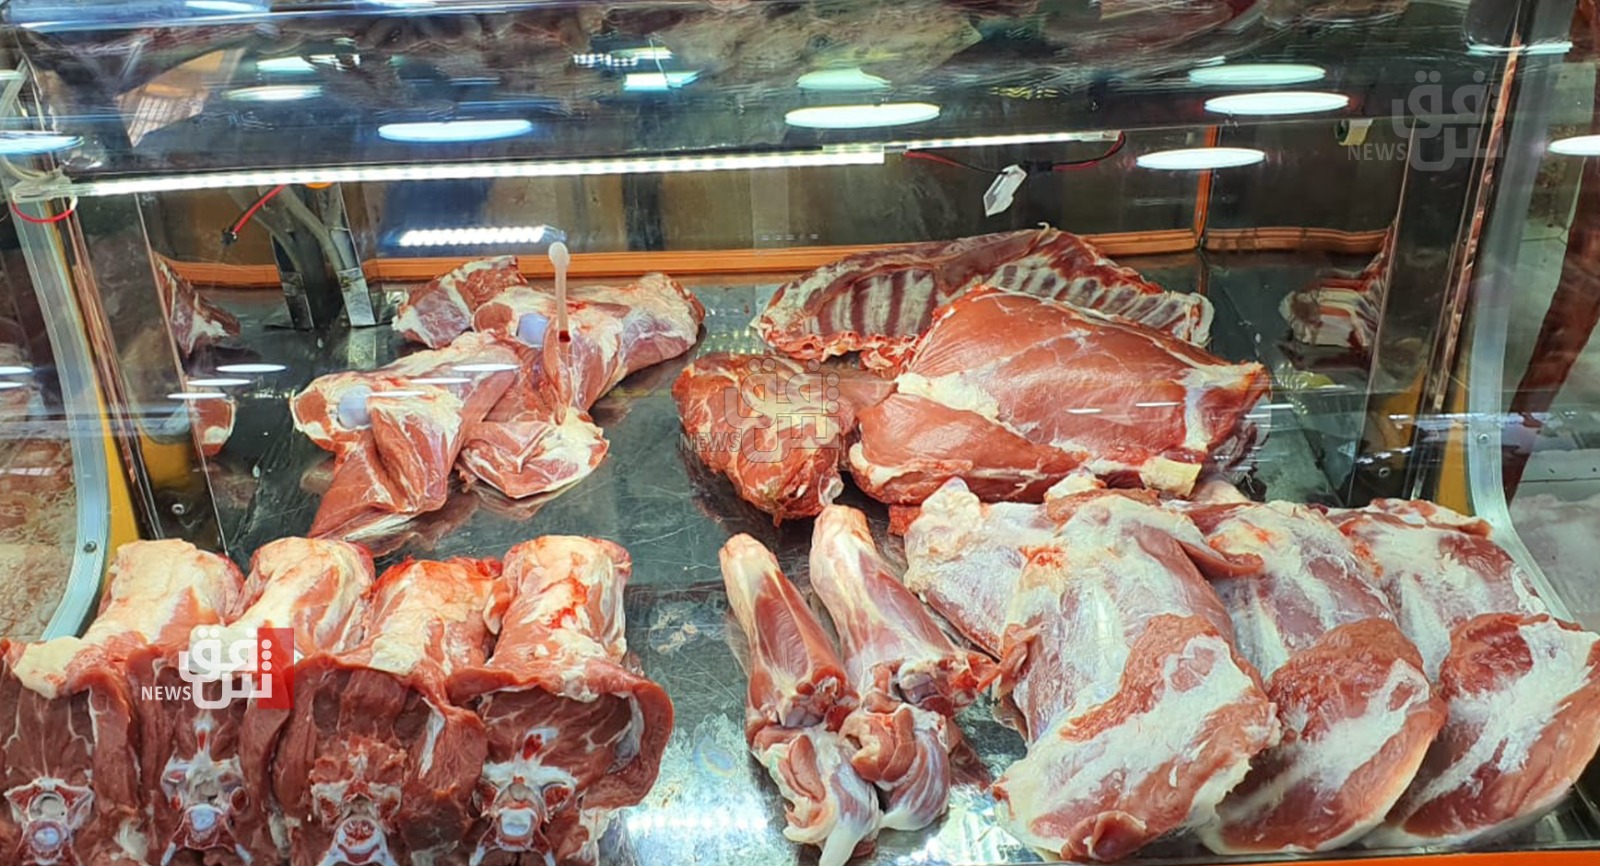 Skyrocketing meat prices plague Iraq despite import efforts